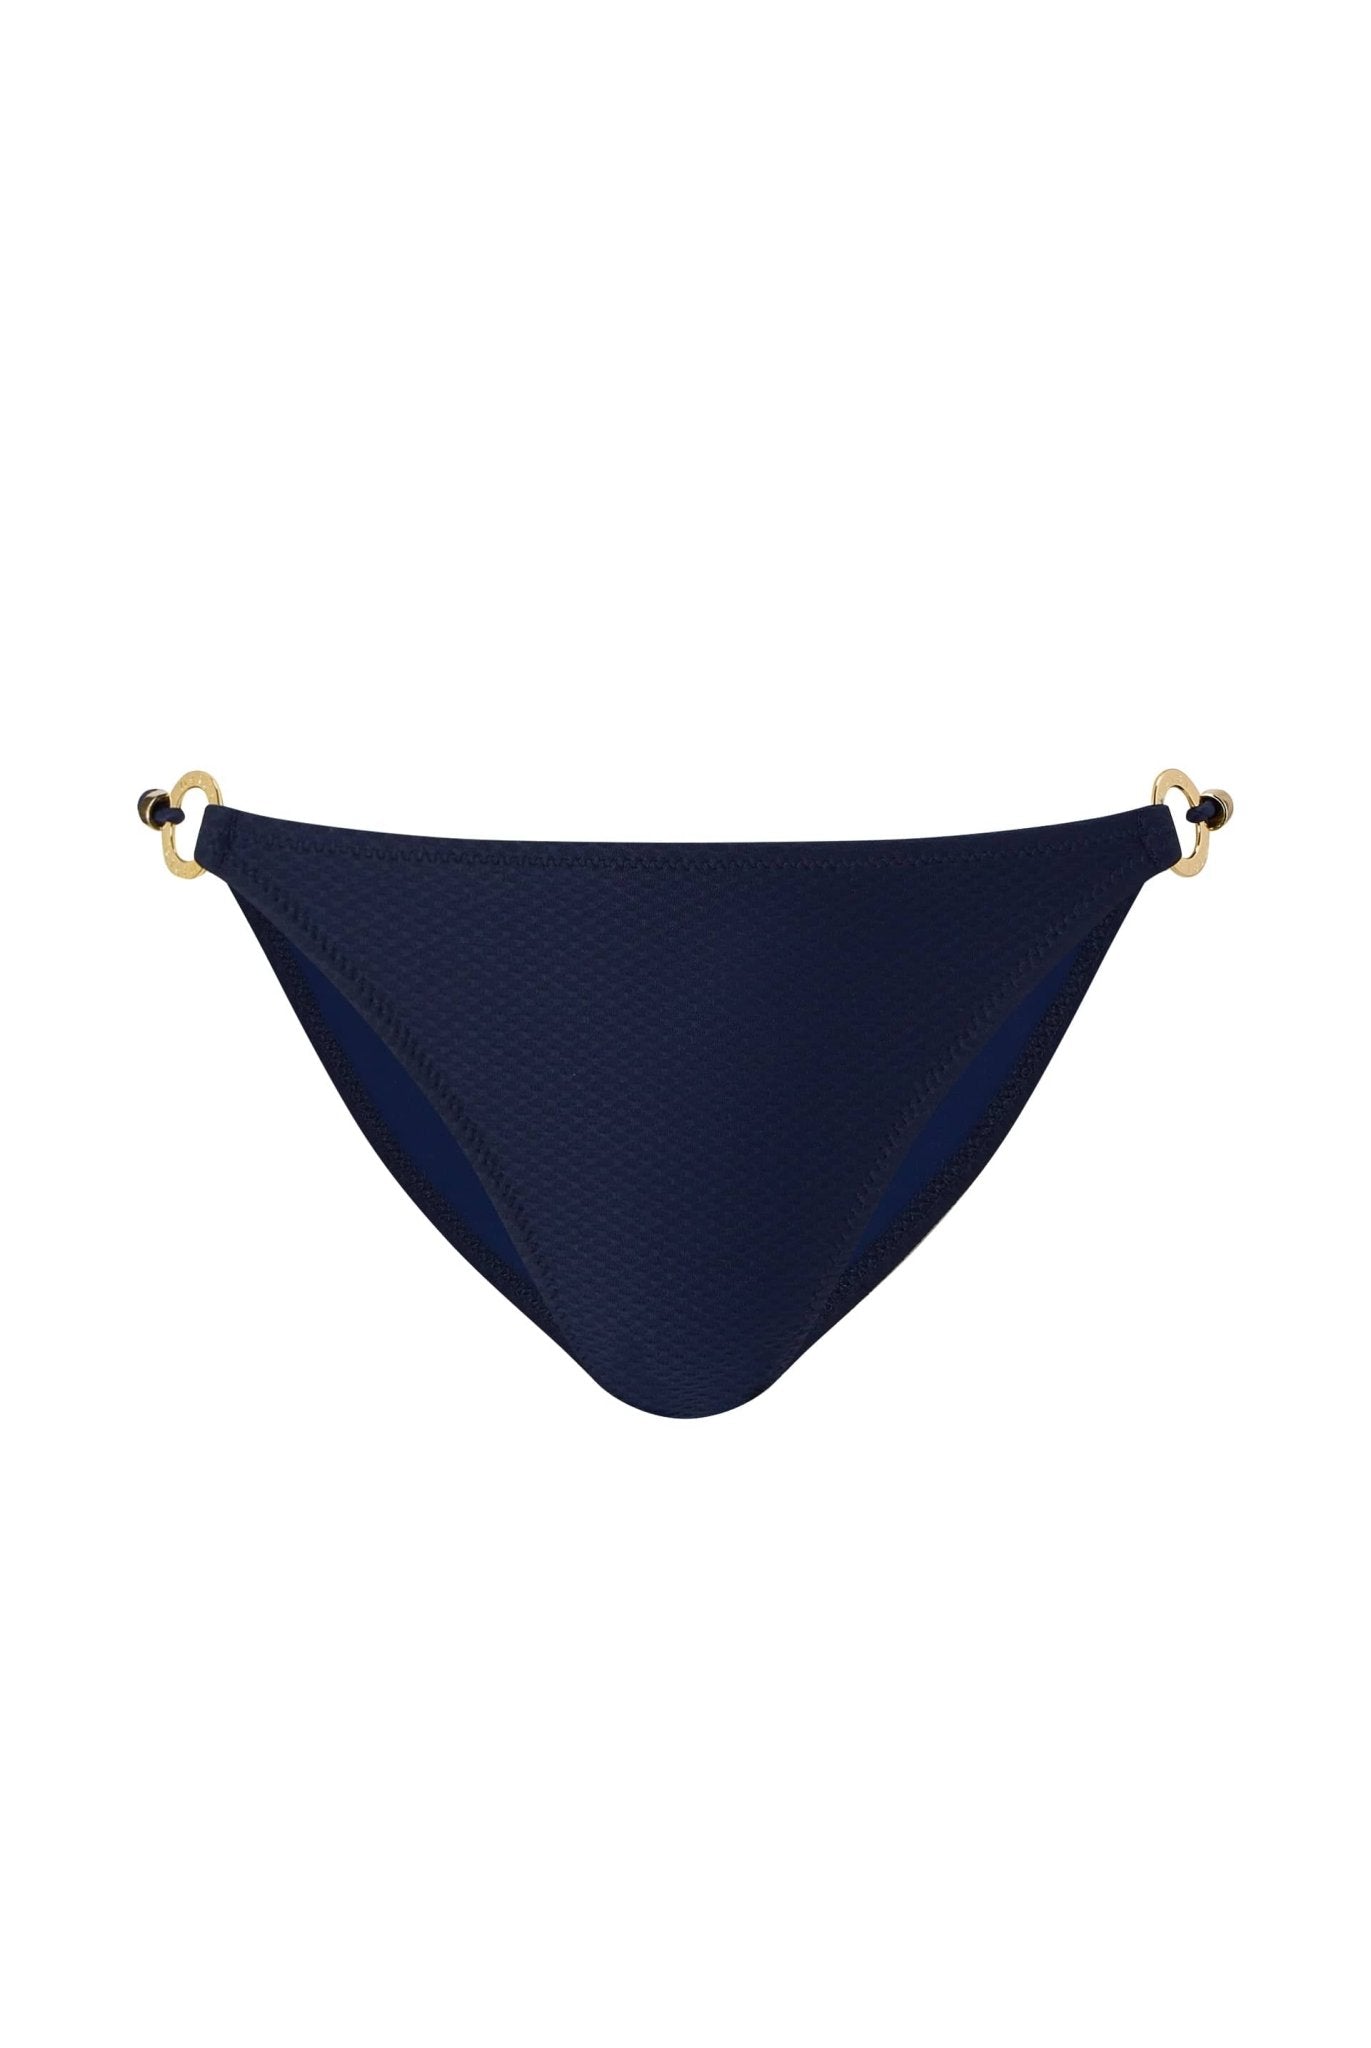 Core Ring Triangle Bikini Bottom in Navy - Heidi Klein - UK Store